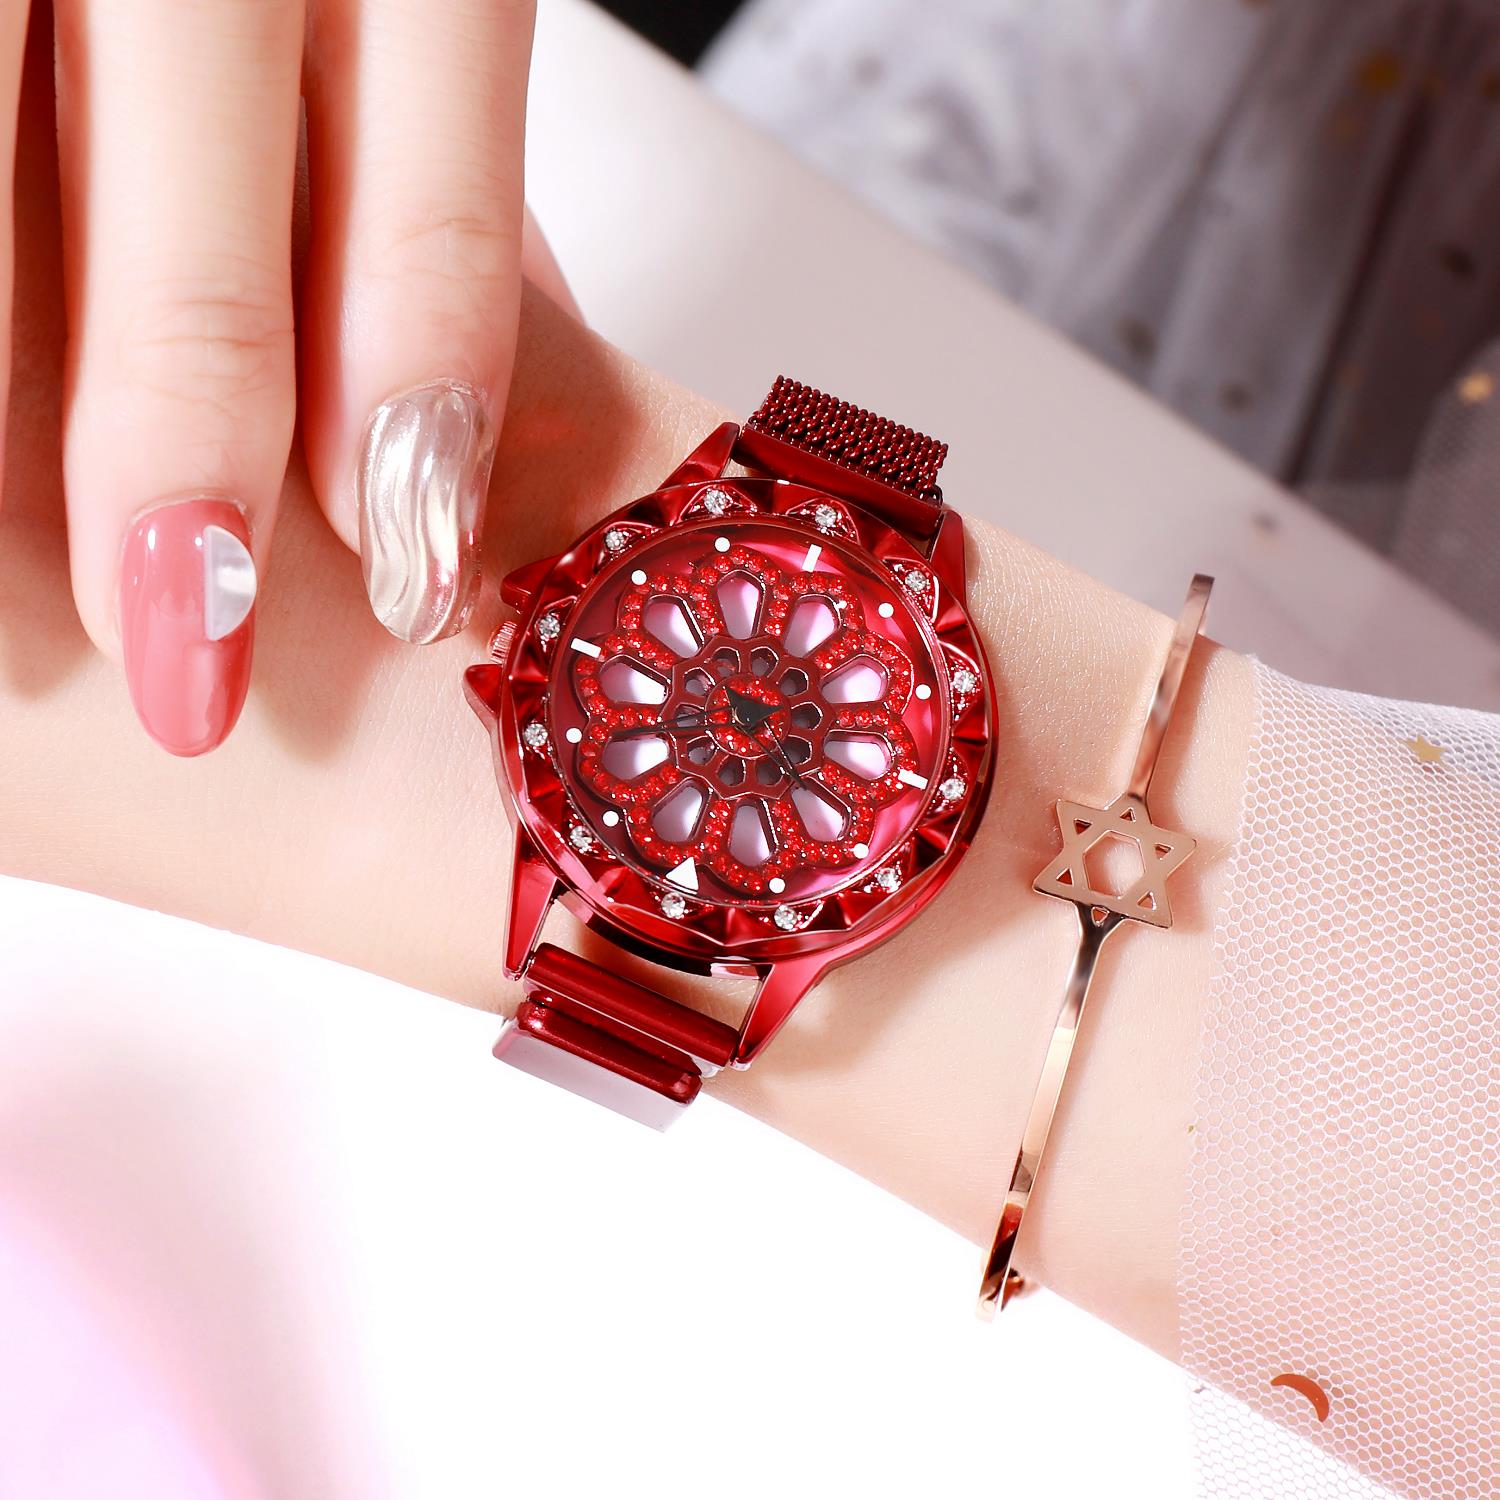 Redwood Tremble Watch Running Women's Rotary Magnetic Absorbing Steel Belt Drilling Fashion Trend Quartz Watch